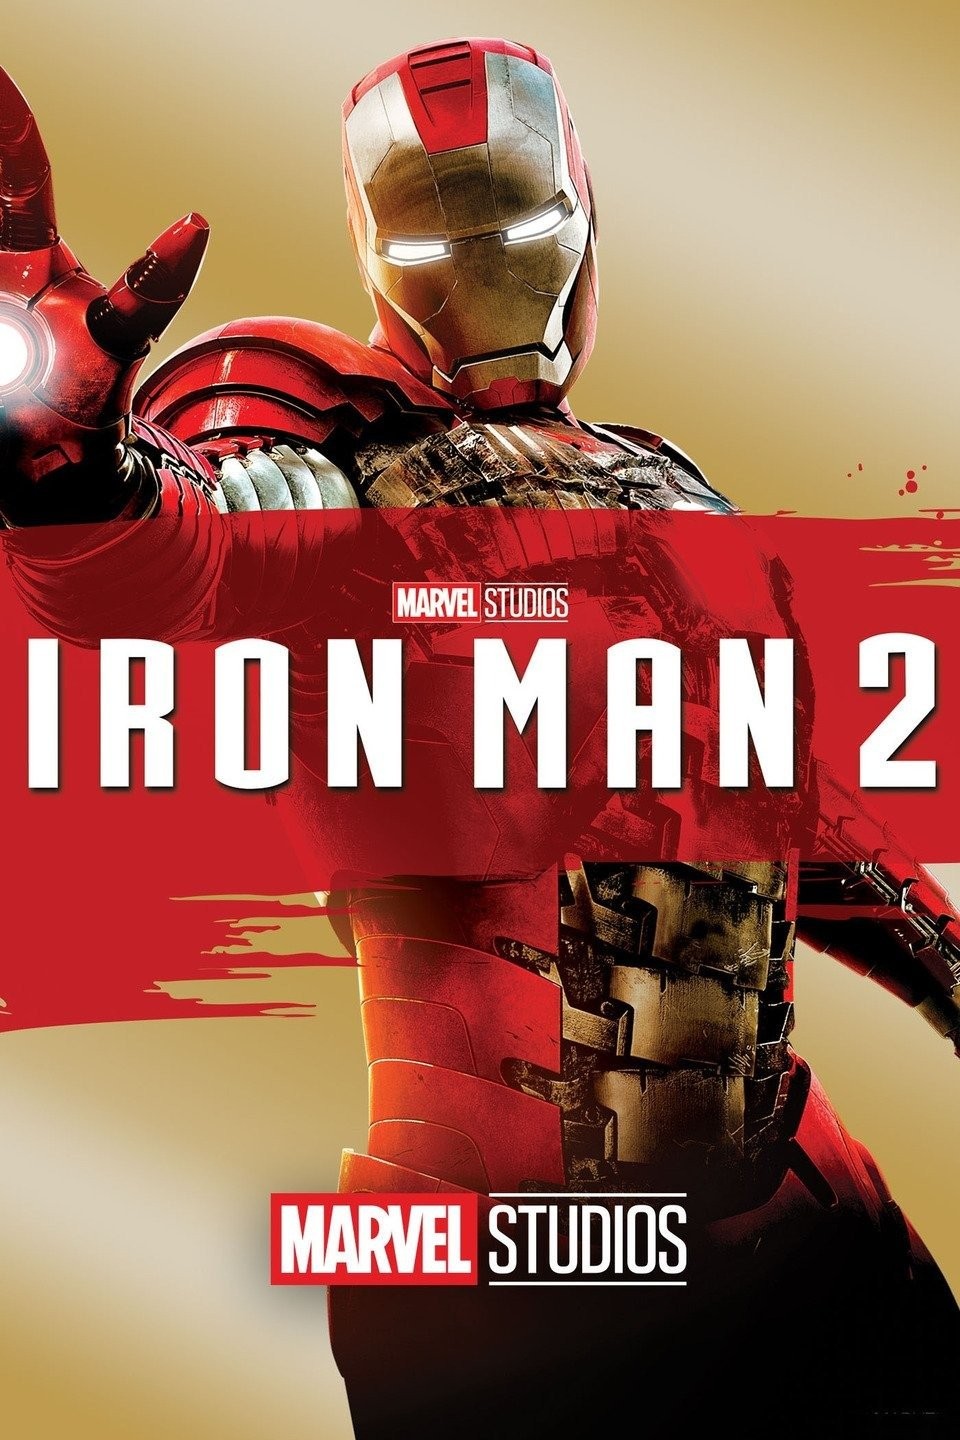 Tony Stark/Iron Man Bra — $45